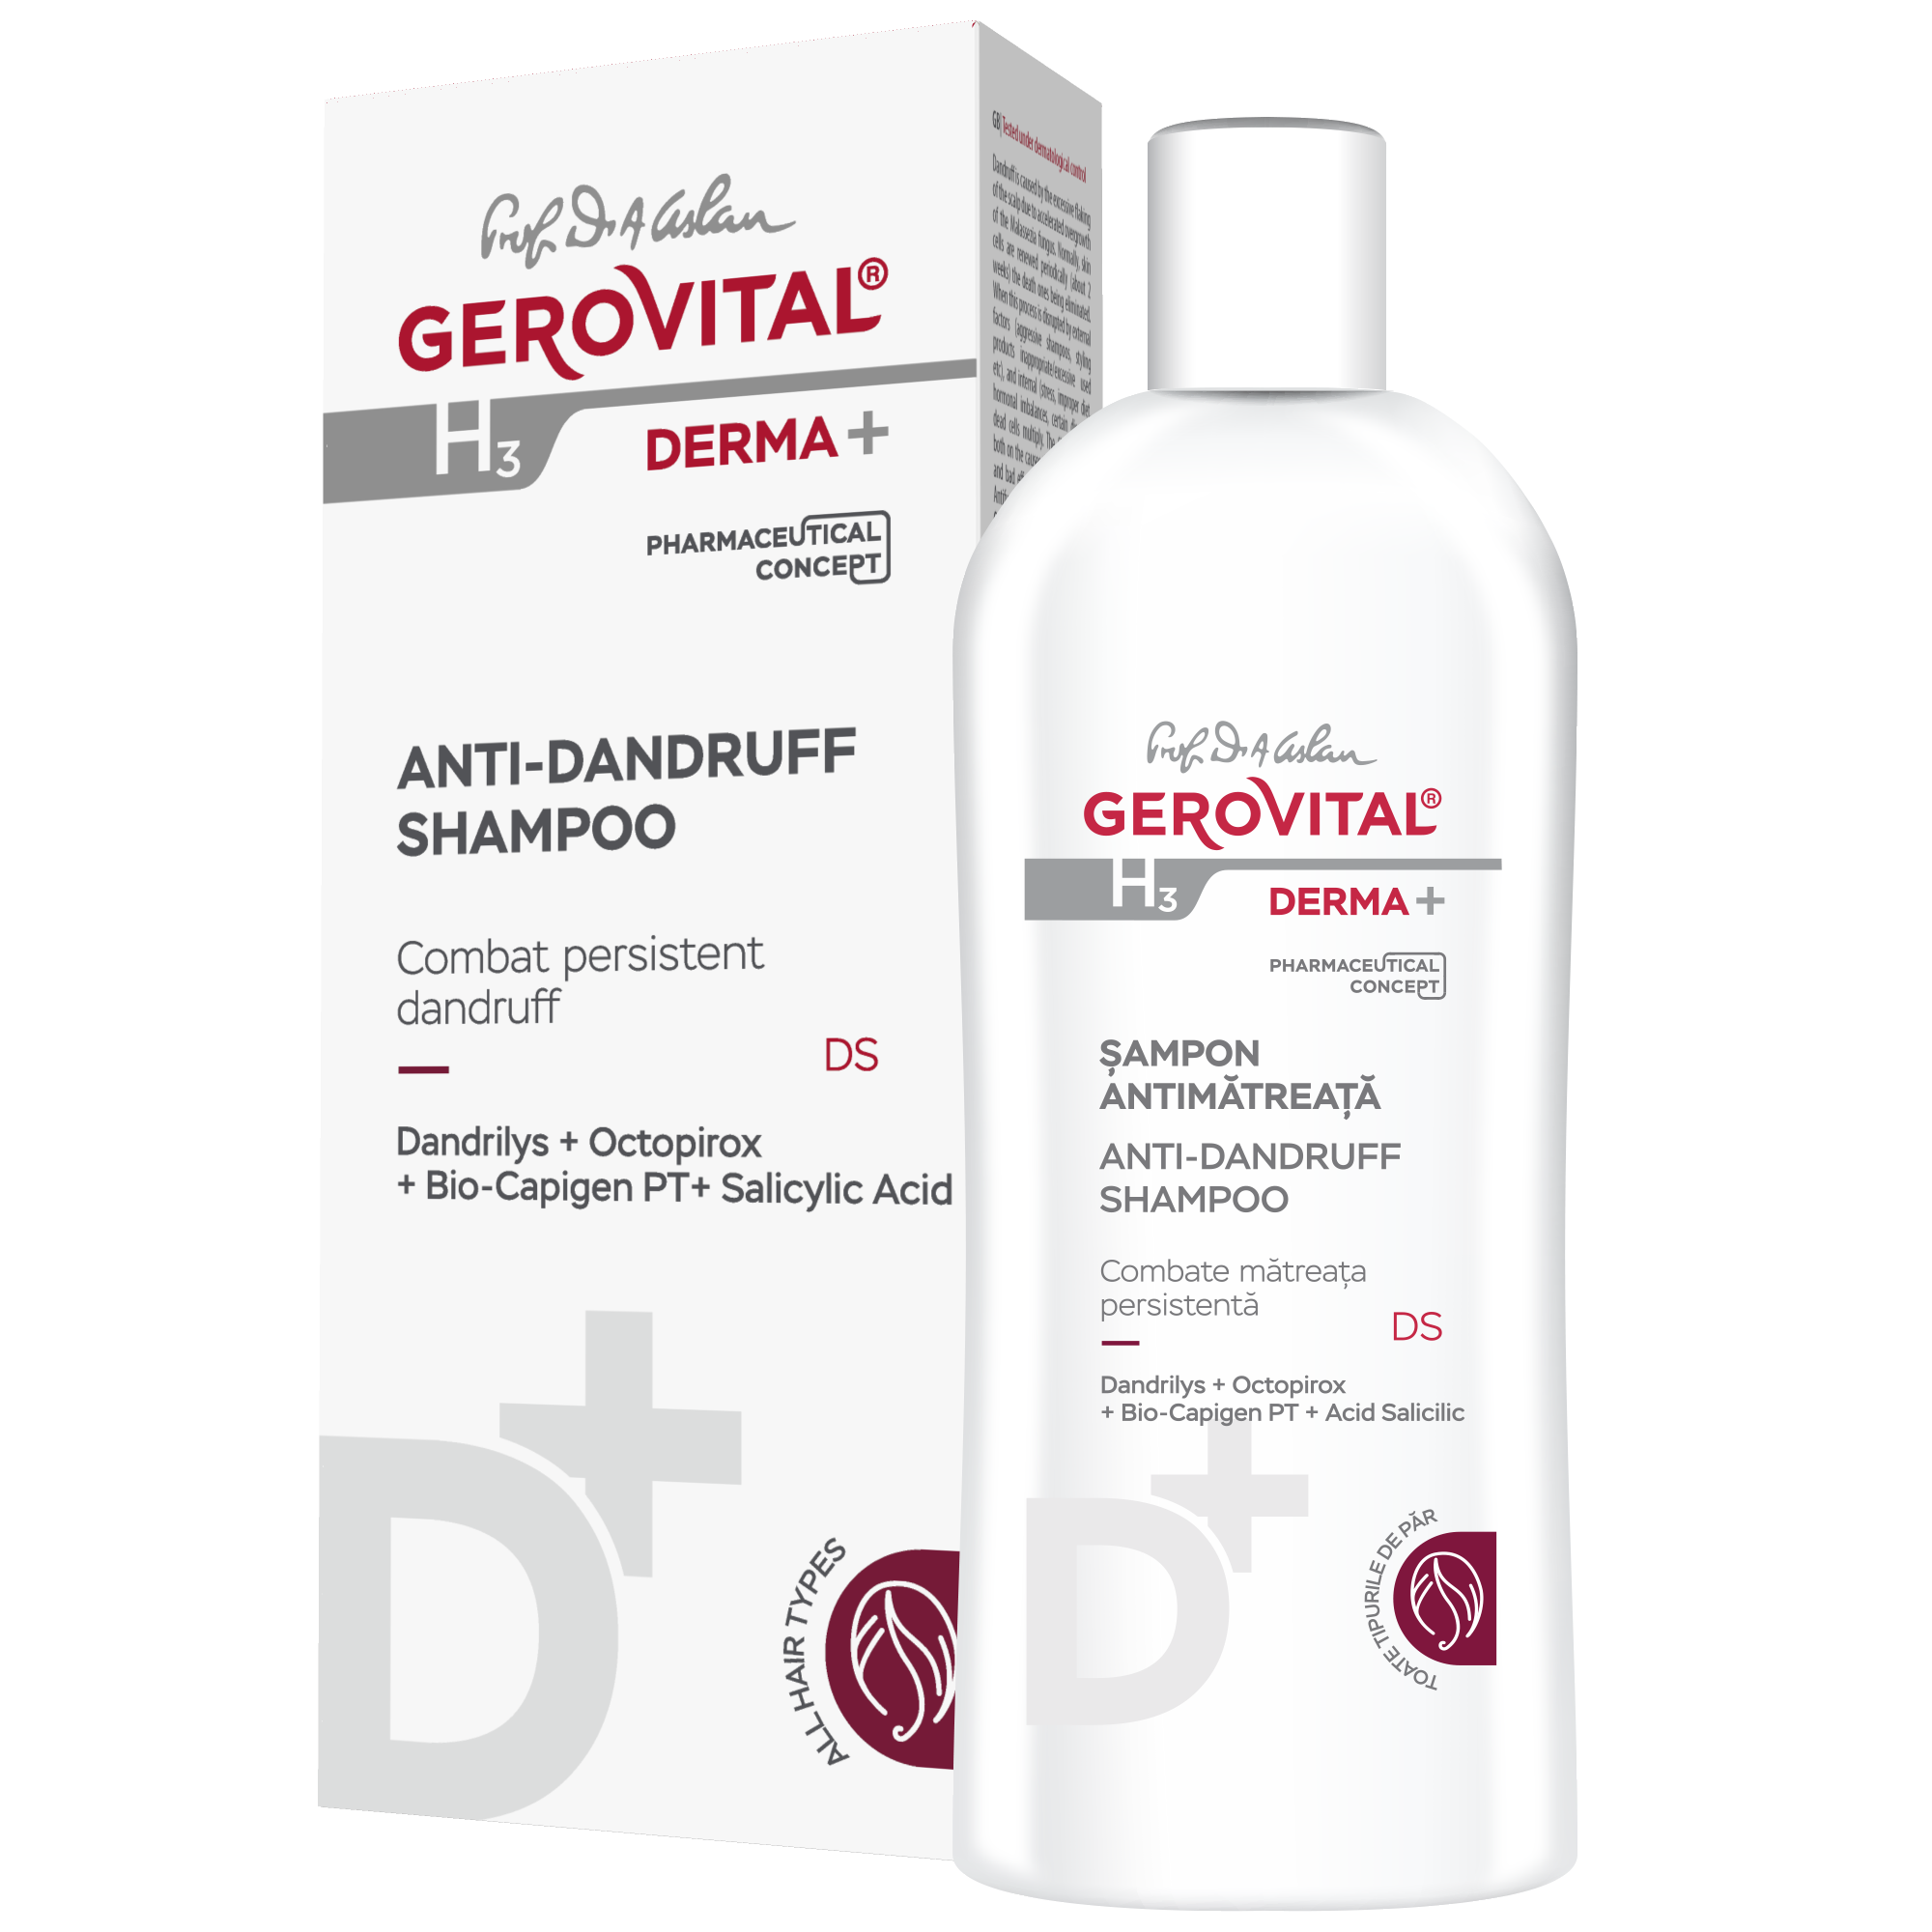 Sampon antimatreata Gerovital H3 Derma+, 200 ml, Gerovital